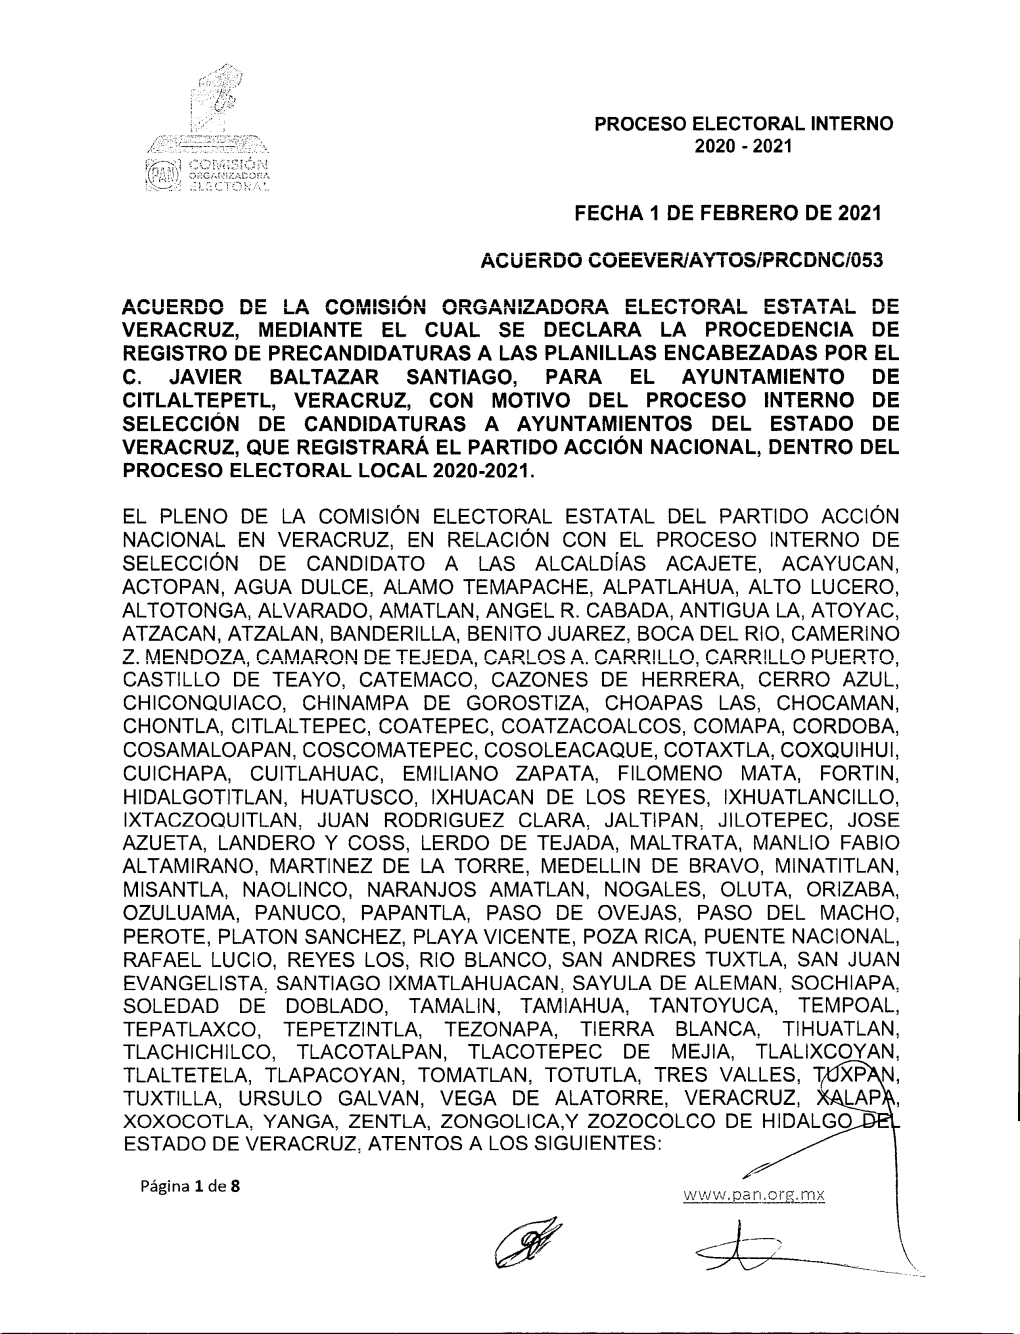 Procedencia Citlaltepetl. Javier Baltazar Santiago 1